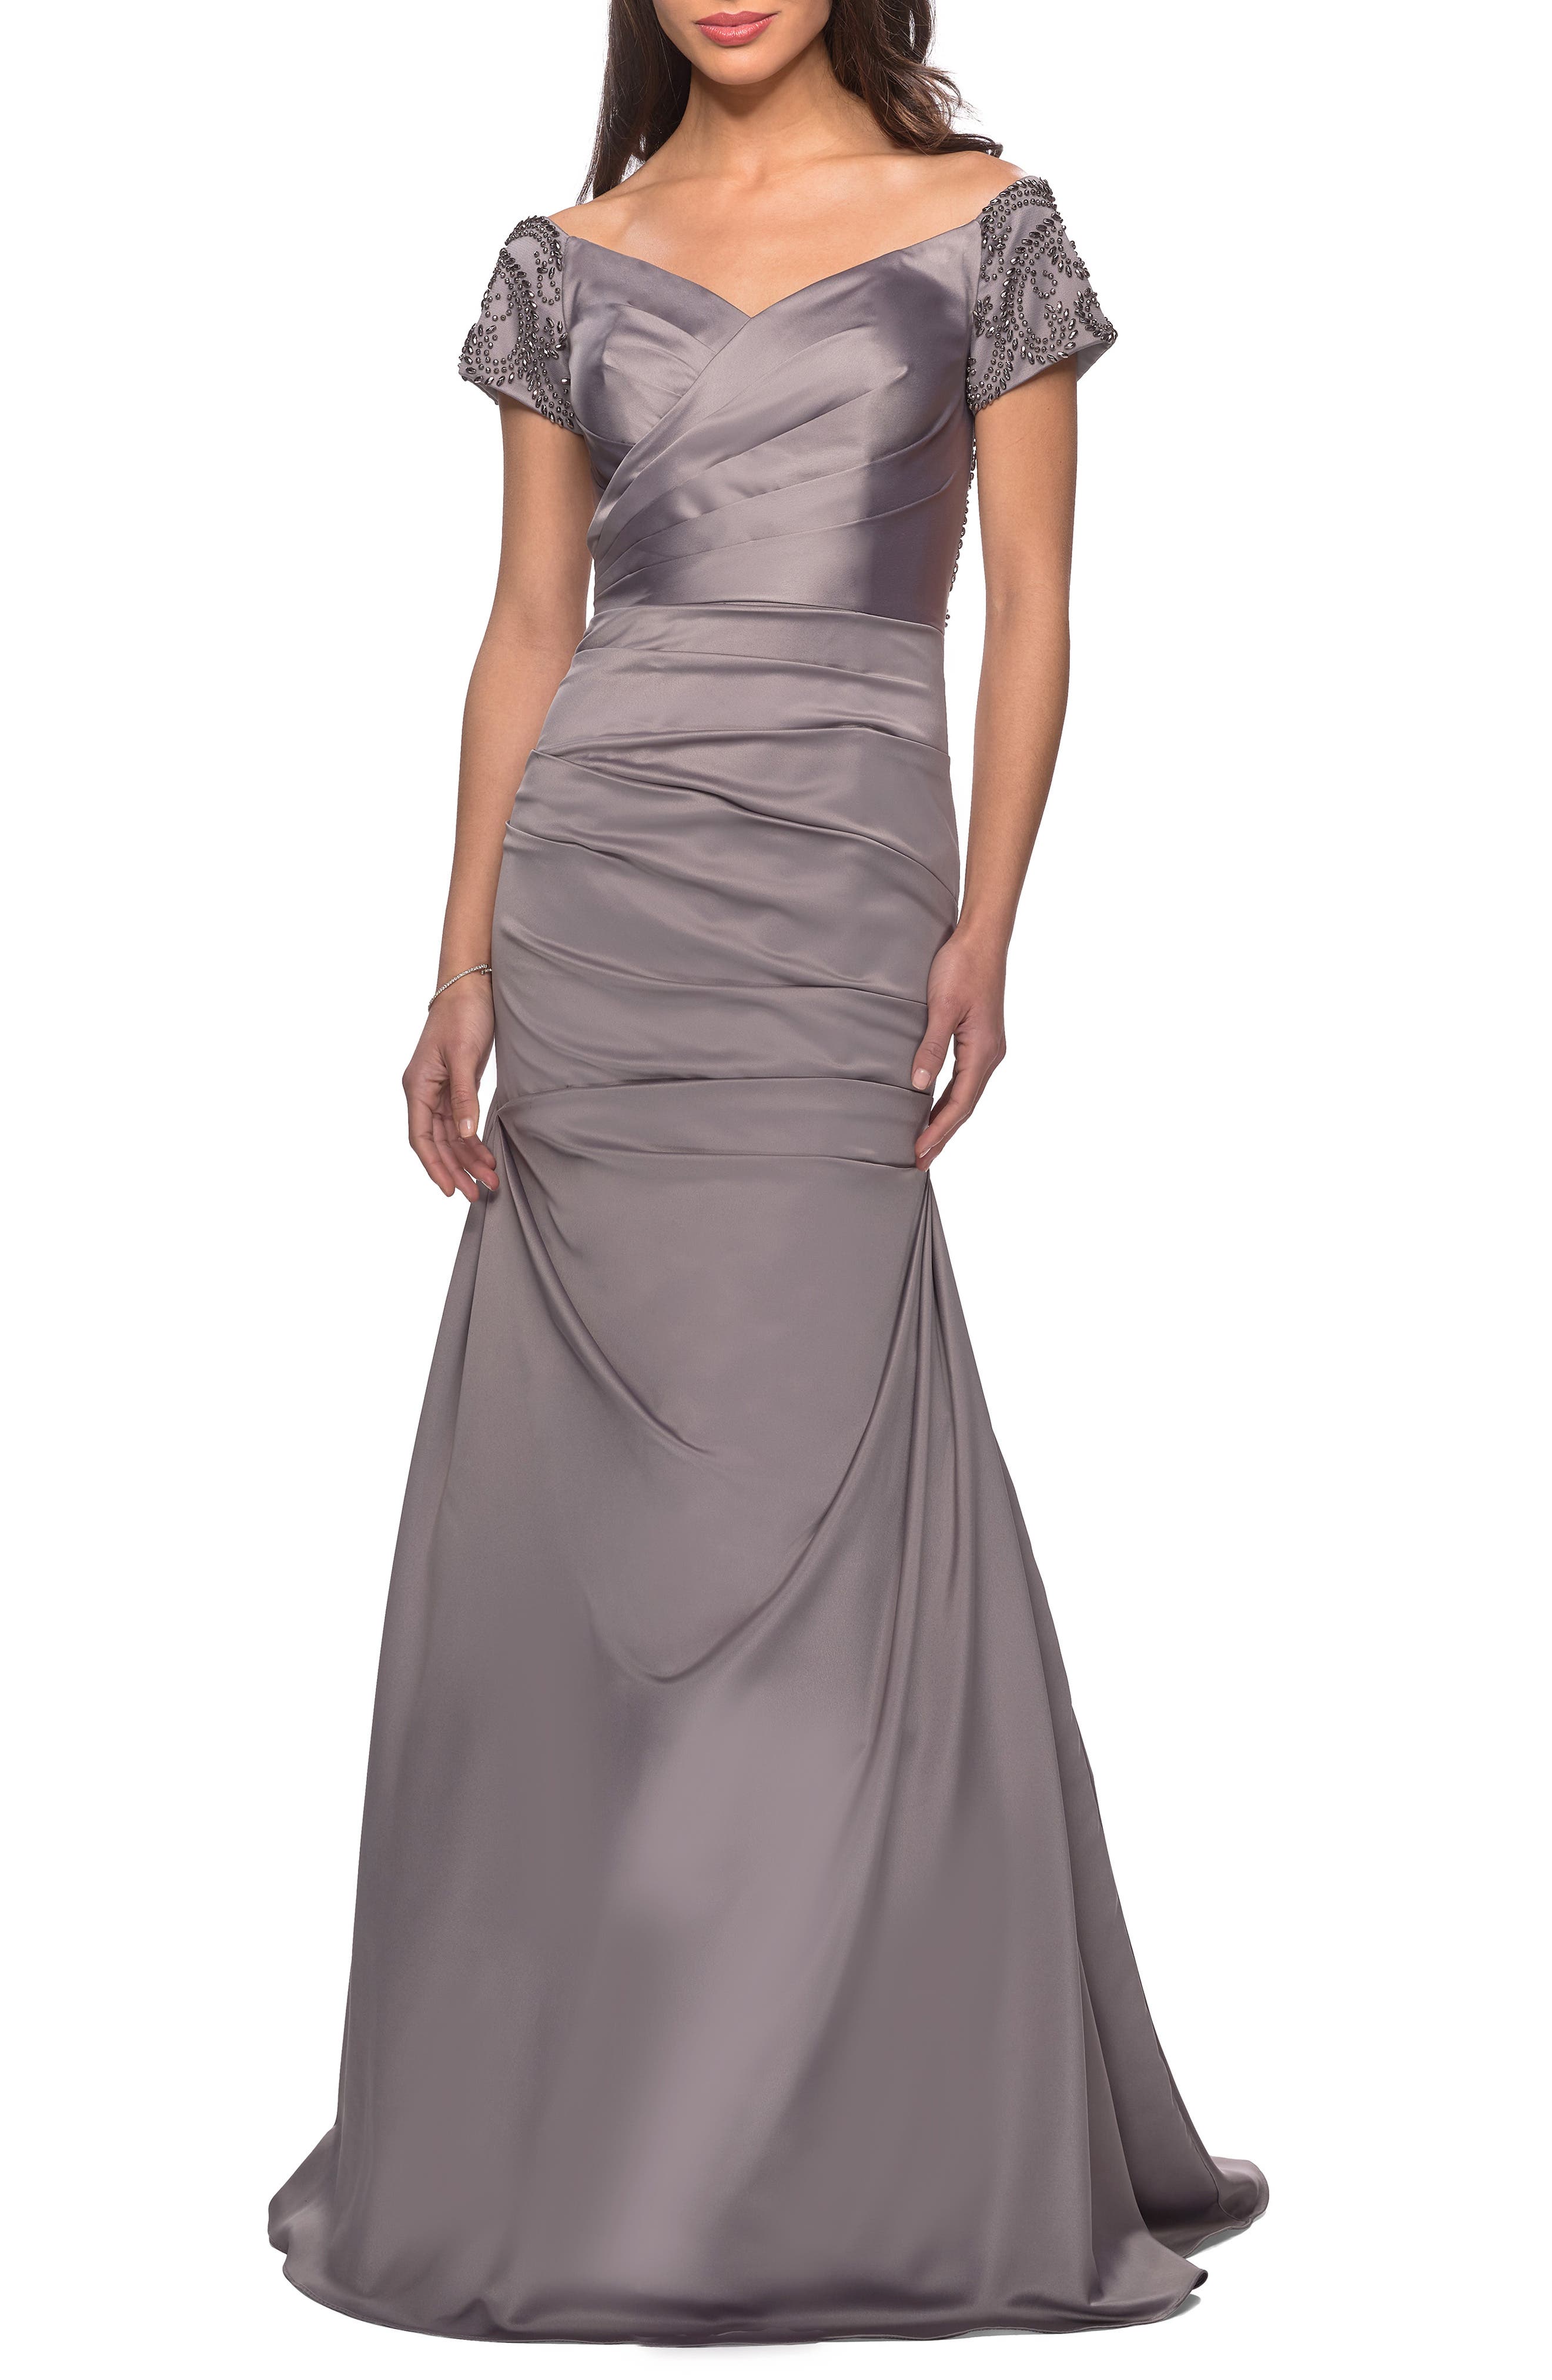 Metallic Formal Dresses ☀ Evening Gowns ...